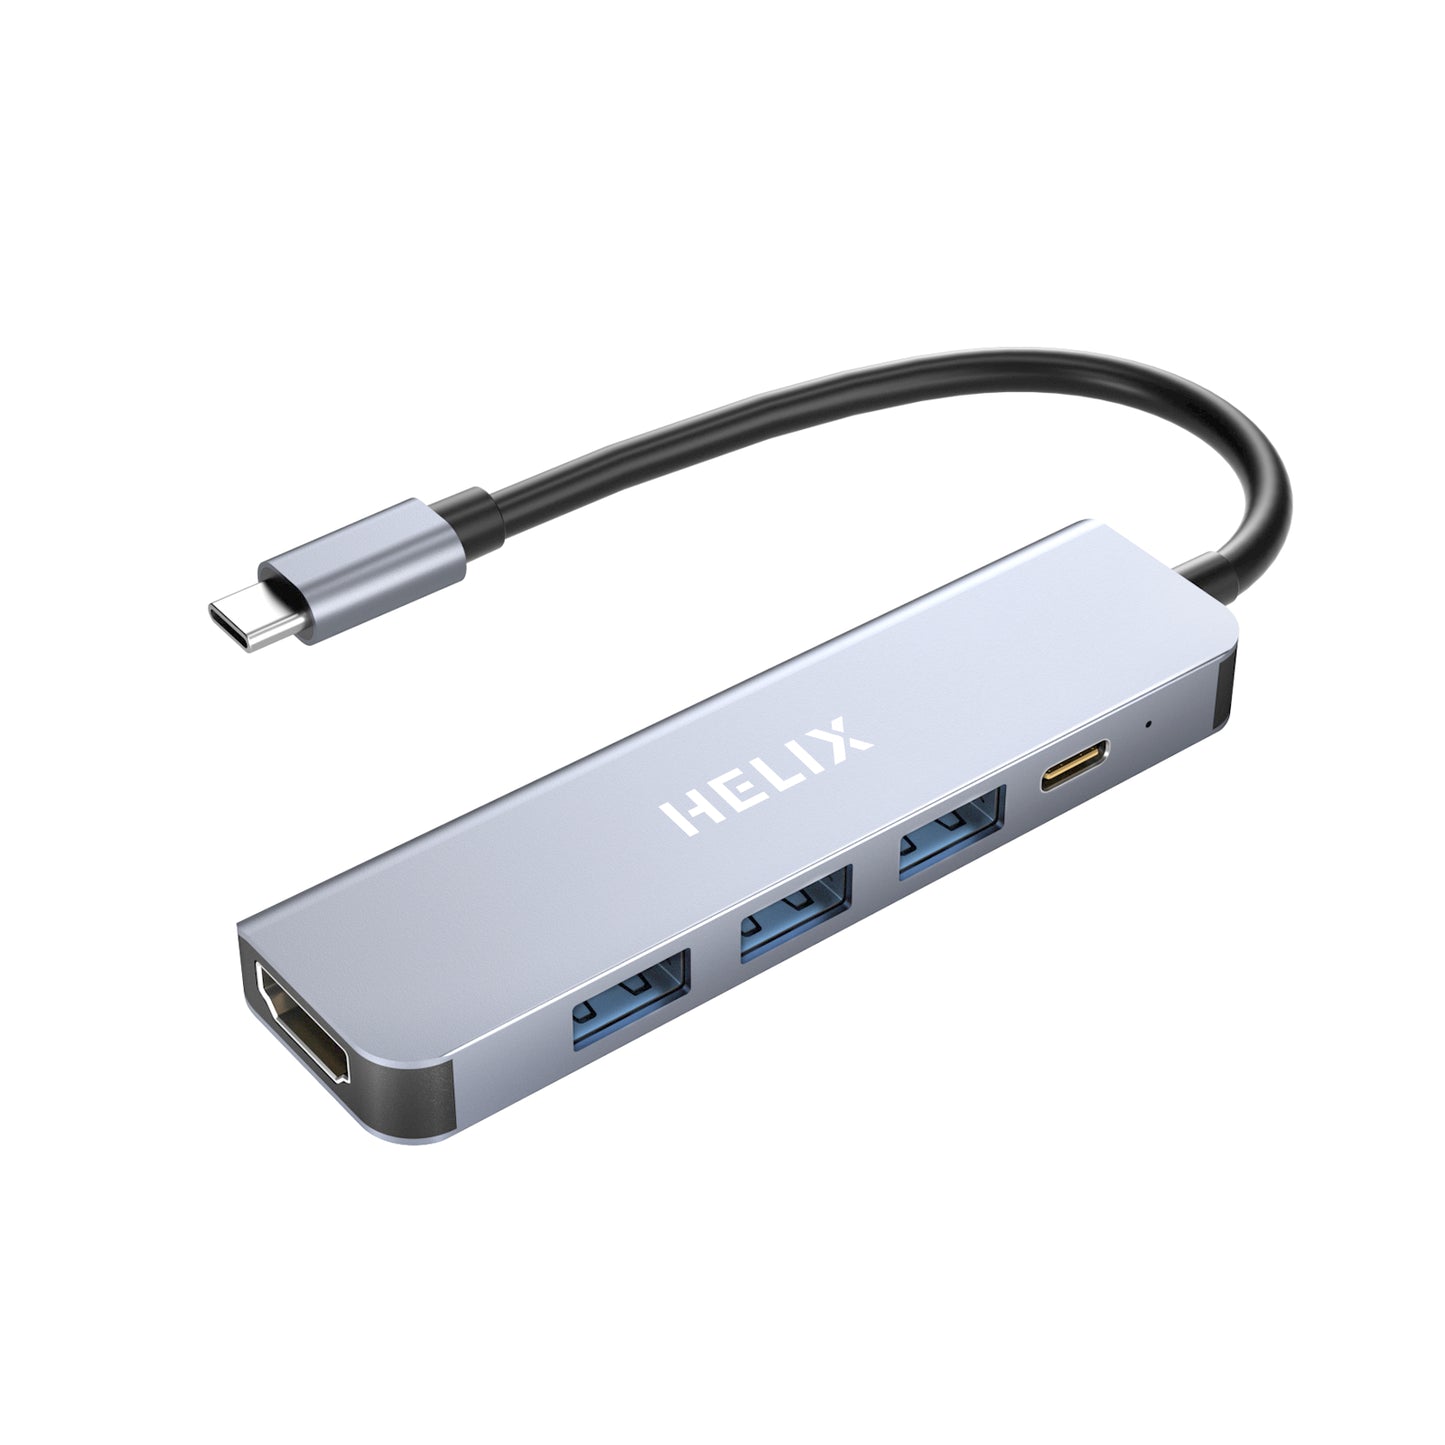 HELIX 5-IN-1 87W PD USB-C HUB With USB 3.0, 4K HDMI, Aluminum ProtectiUSB HUBHELIXHELIX